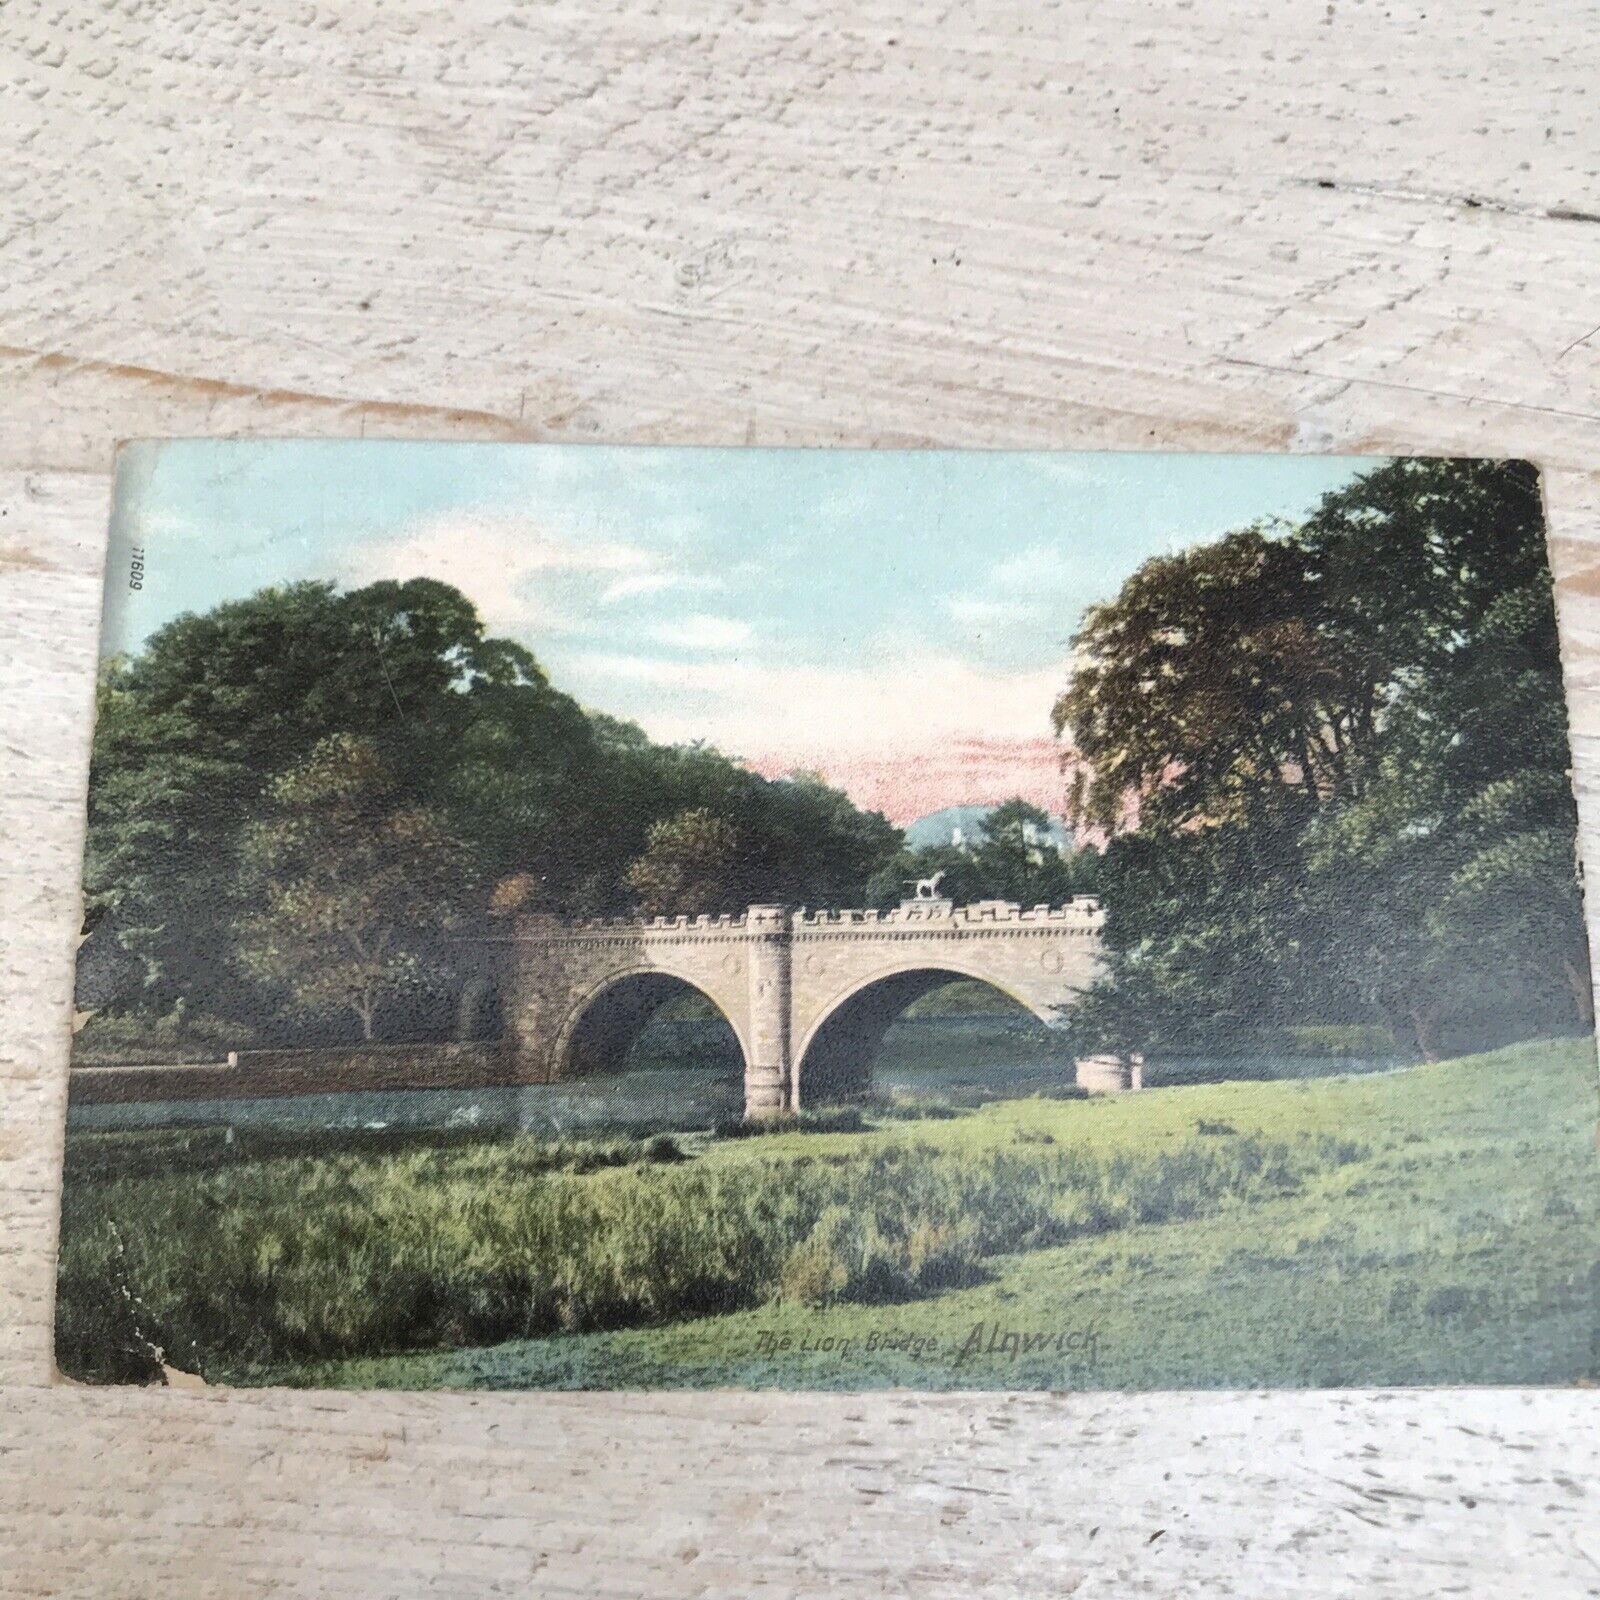 Used Service The Lion Bridge Alnwick. Postmark 1914 Wrench Series 11609